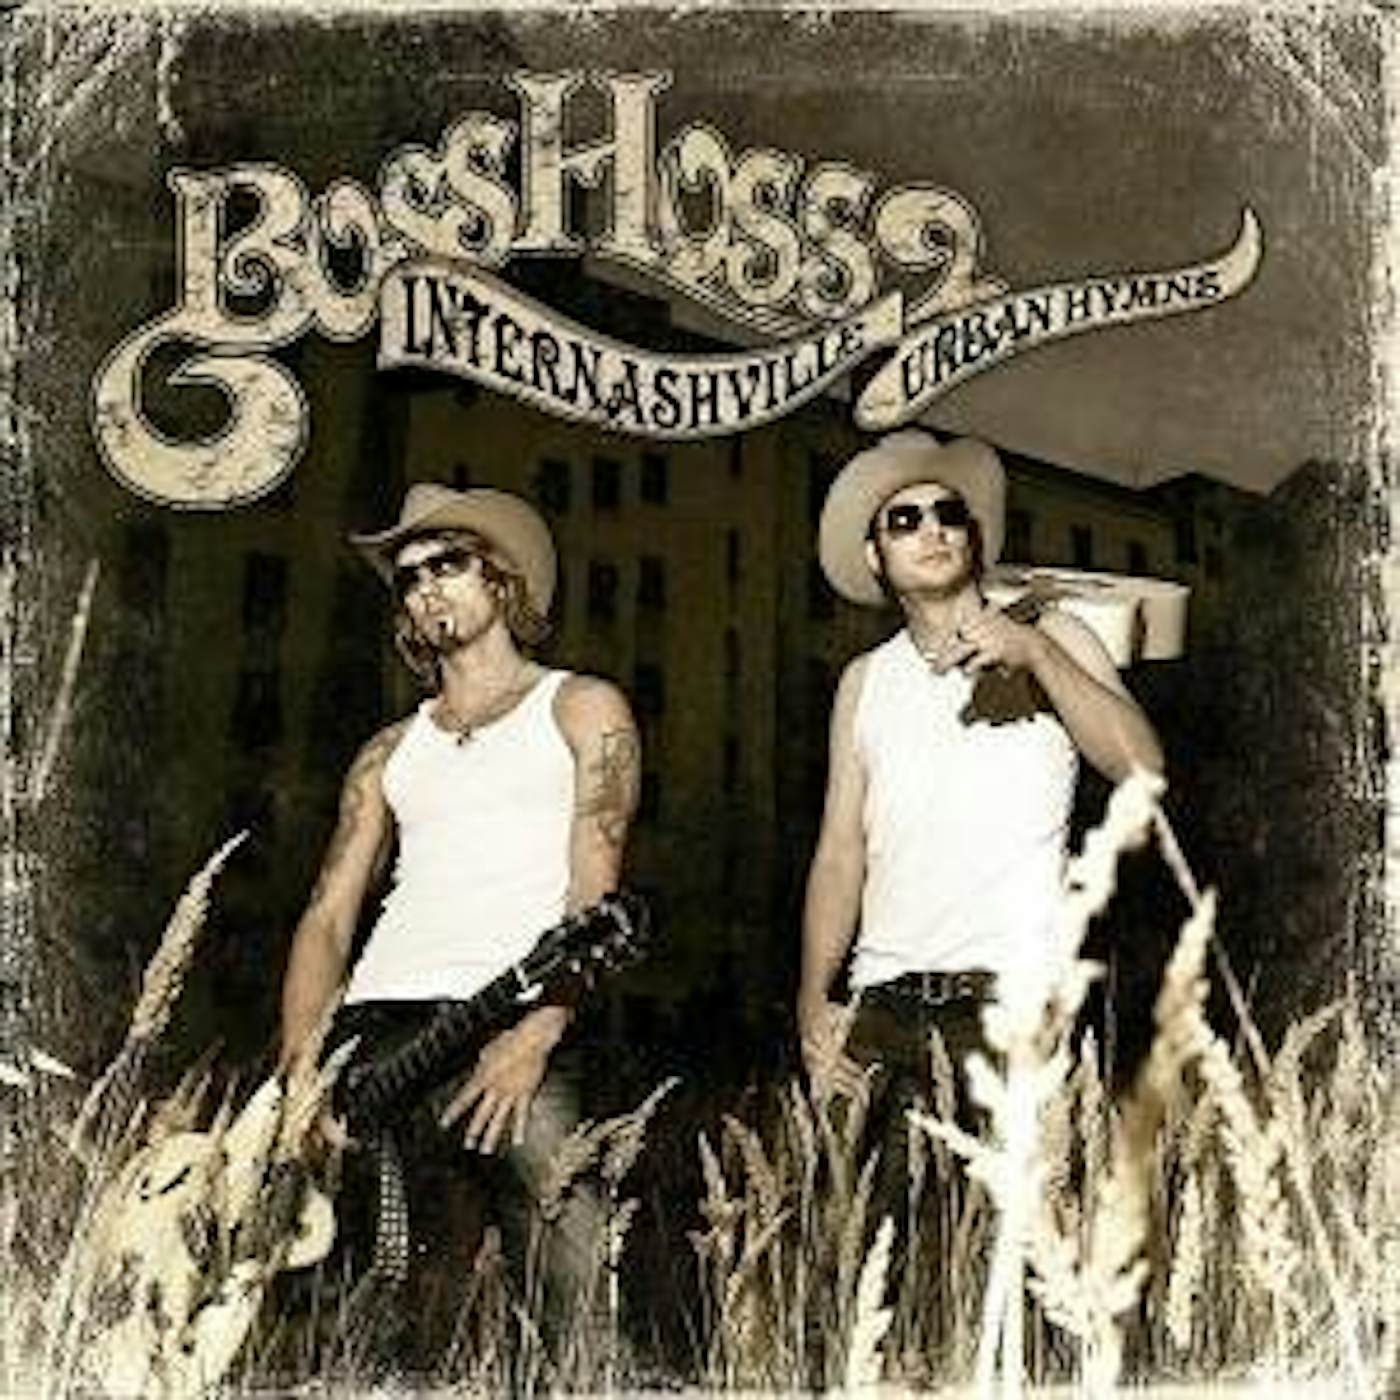 The BossHoss INTERNASHVILLE URBAN HYMN CD